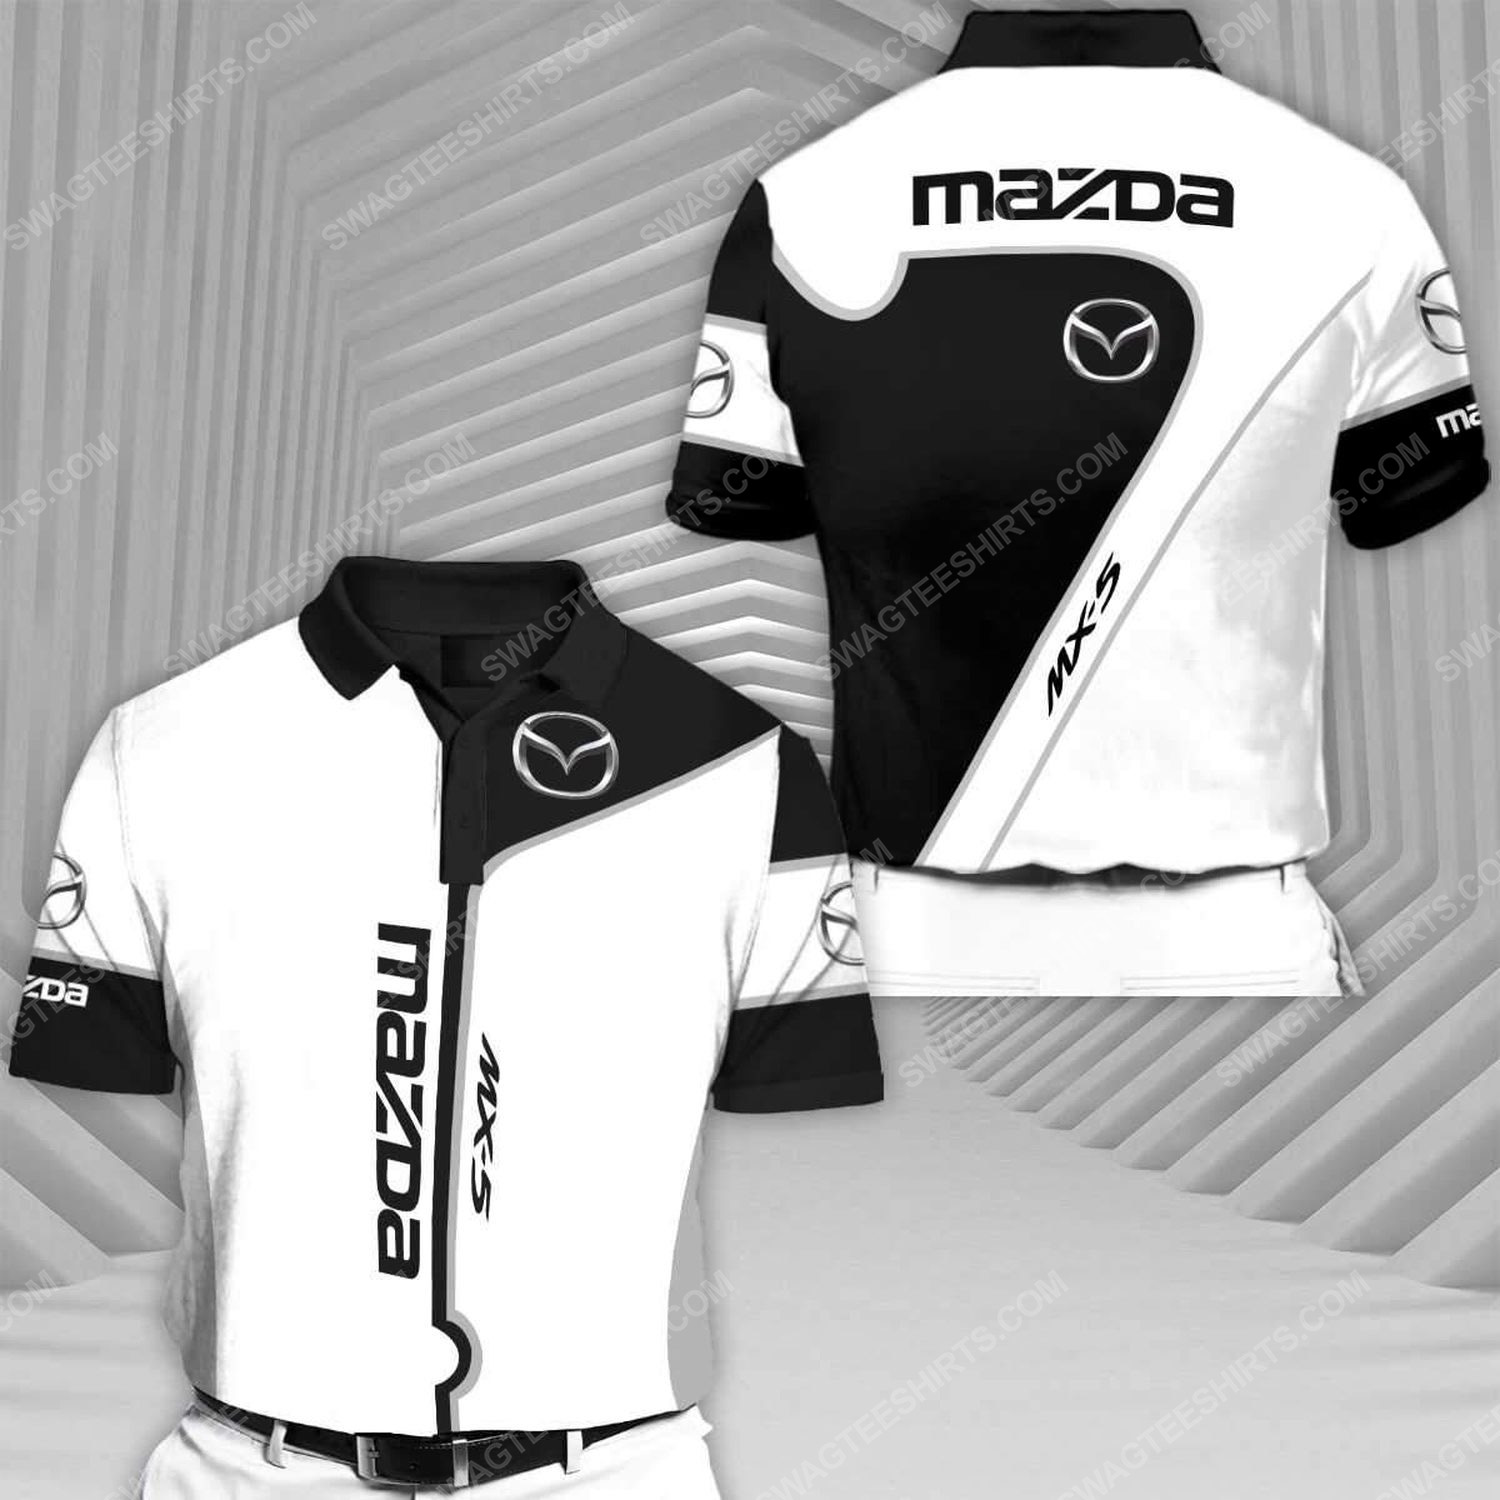 The mazda mx 5 sports car racing all over print polo shirt 1 - Copy (2)